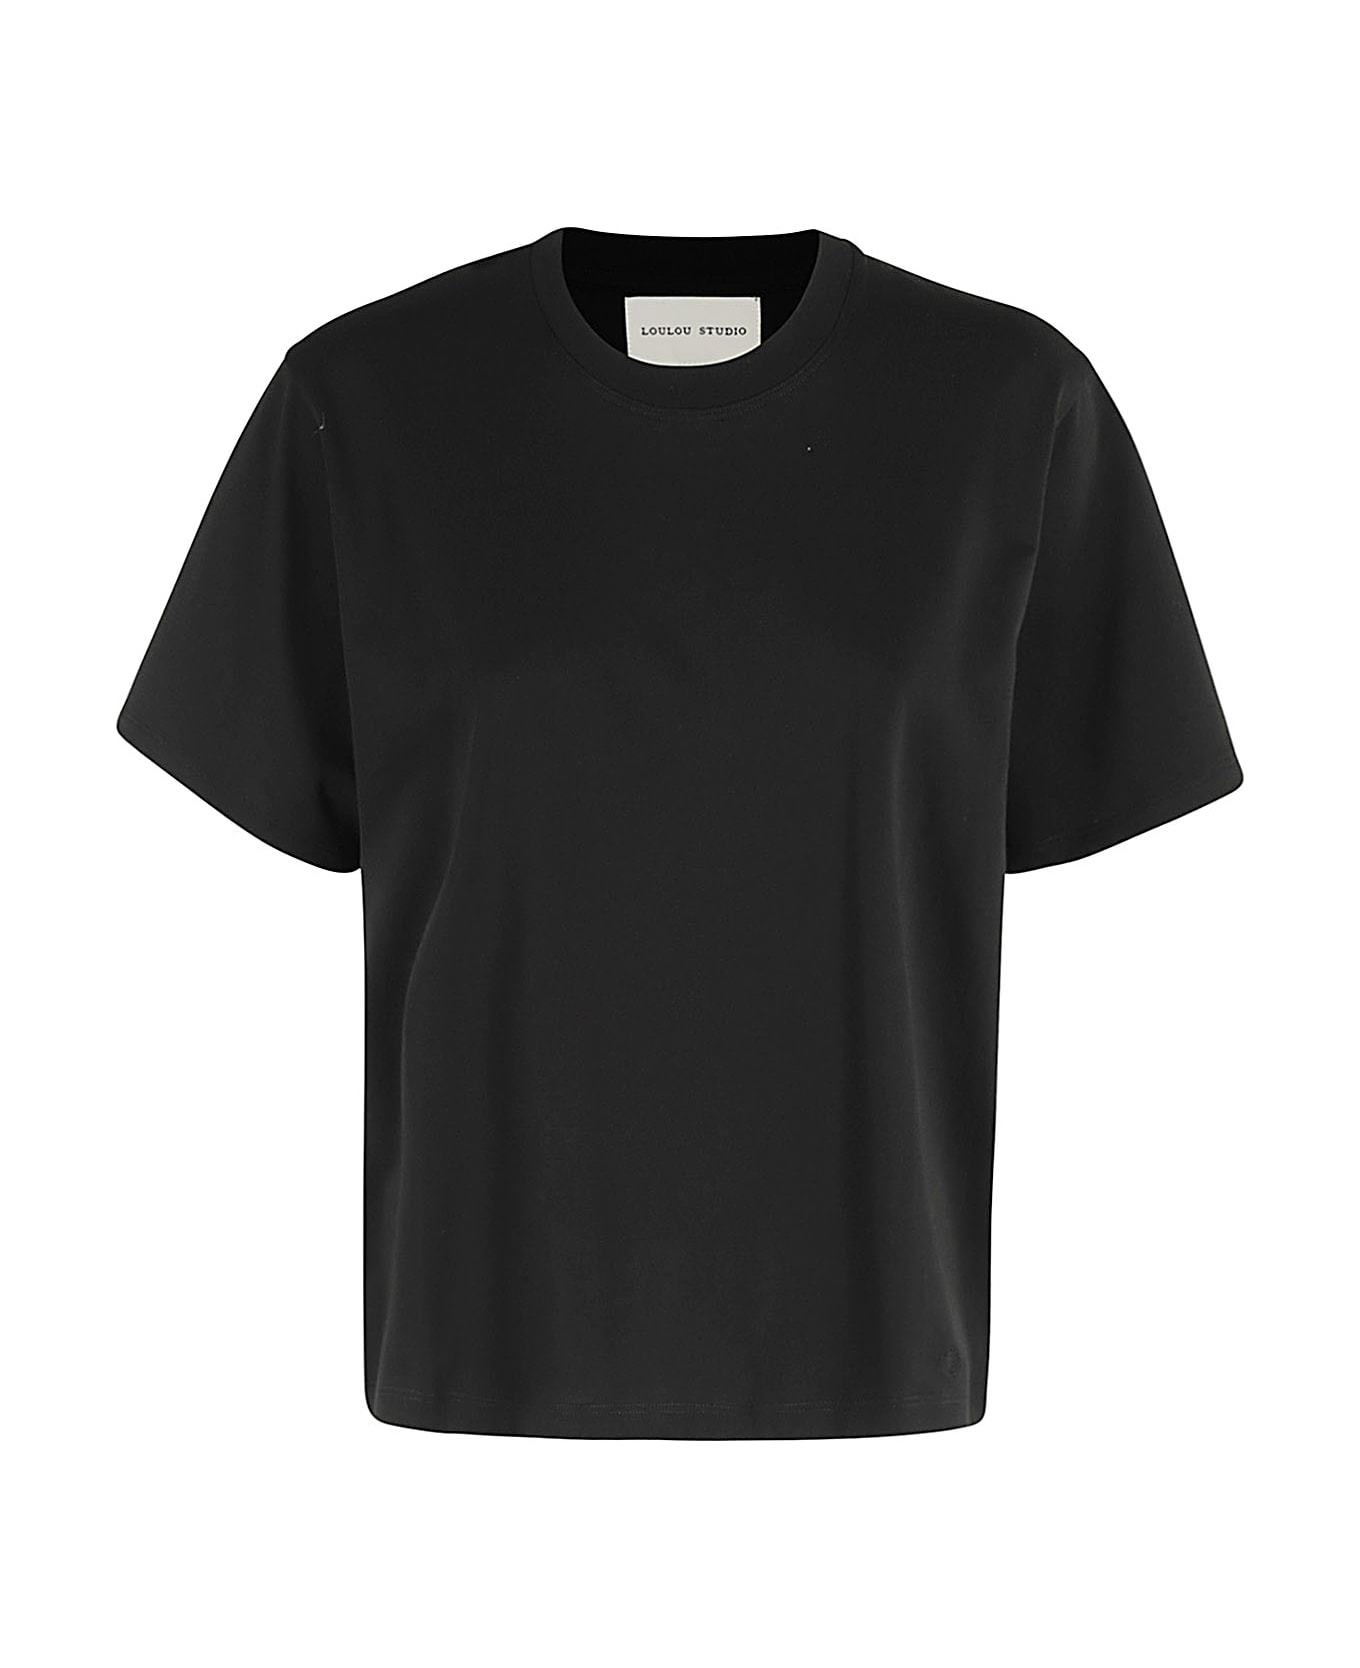 Loulou Studio Cotton Tshirt - Black